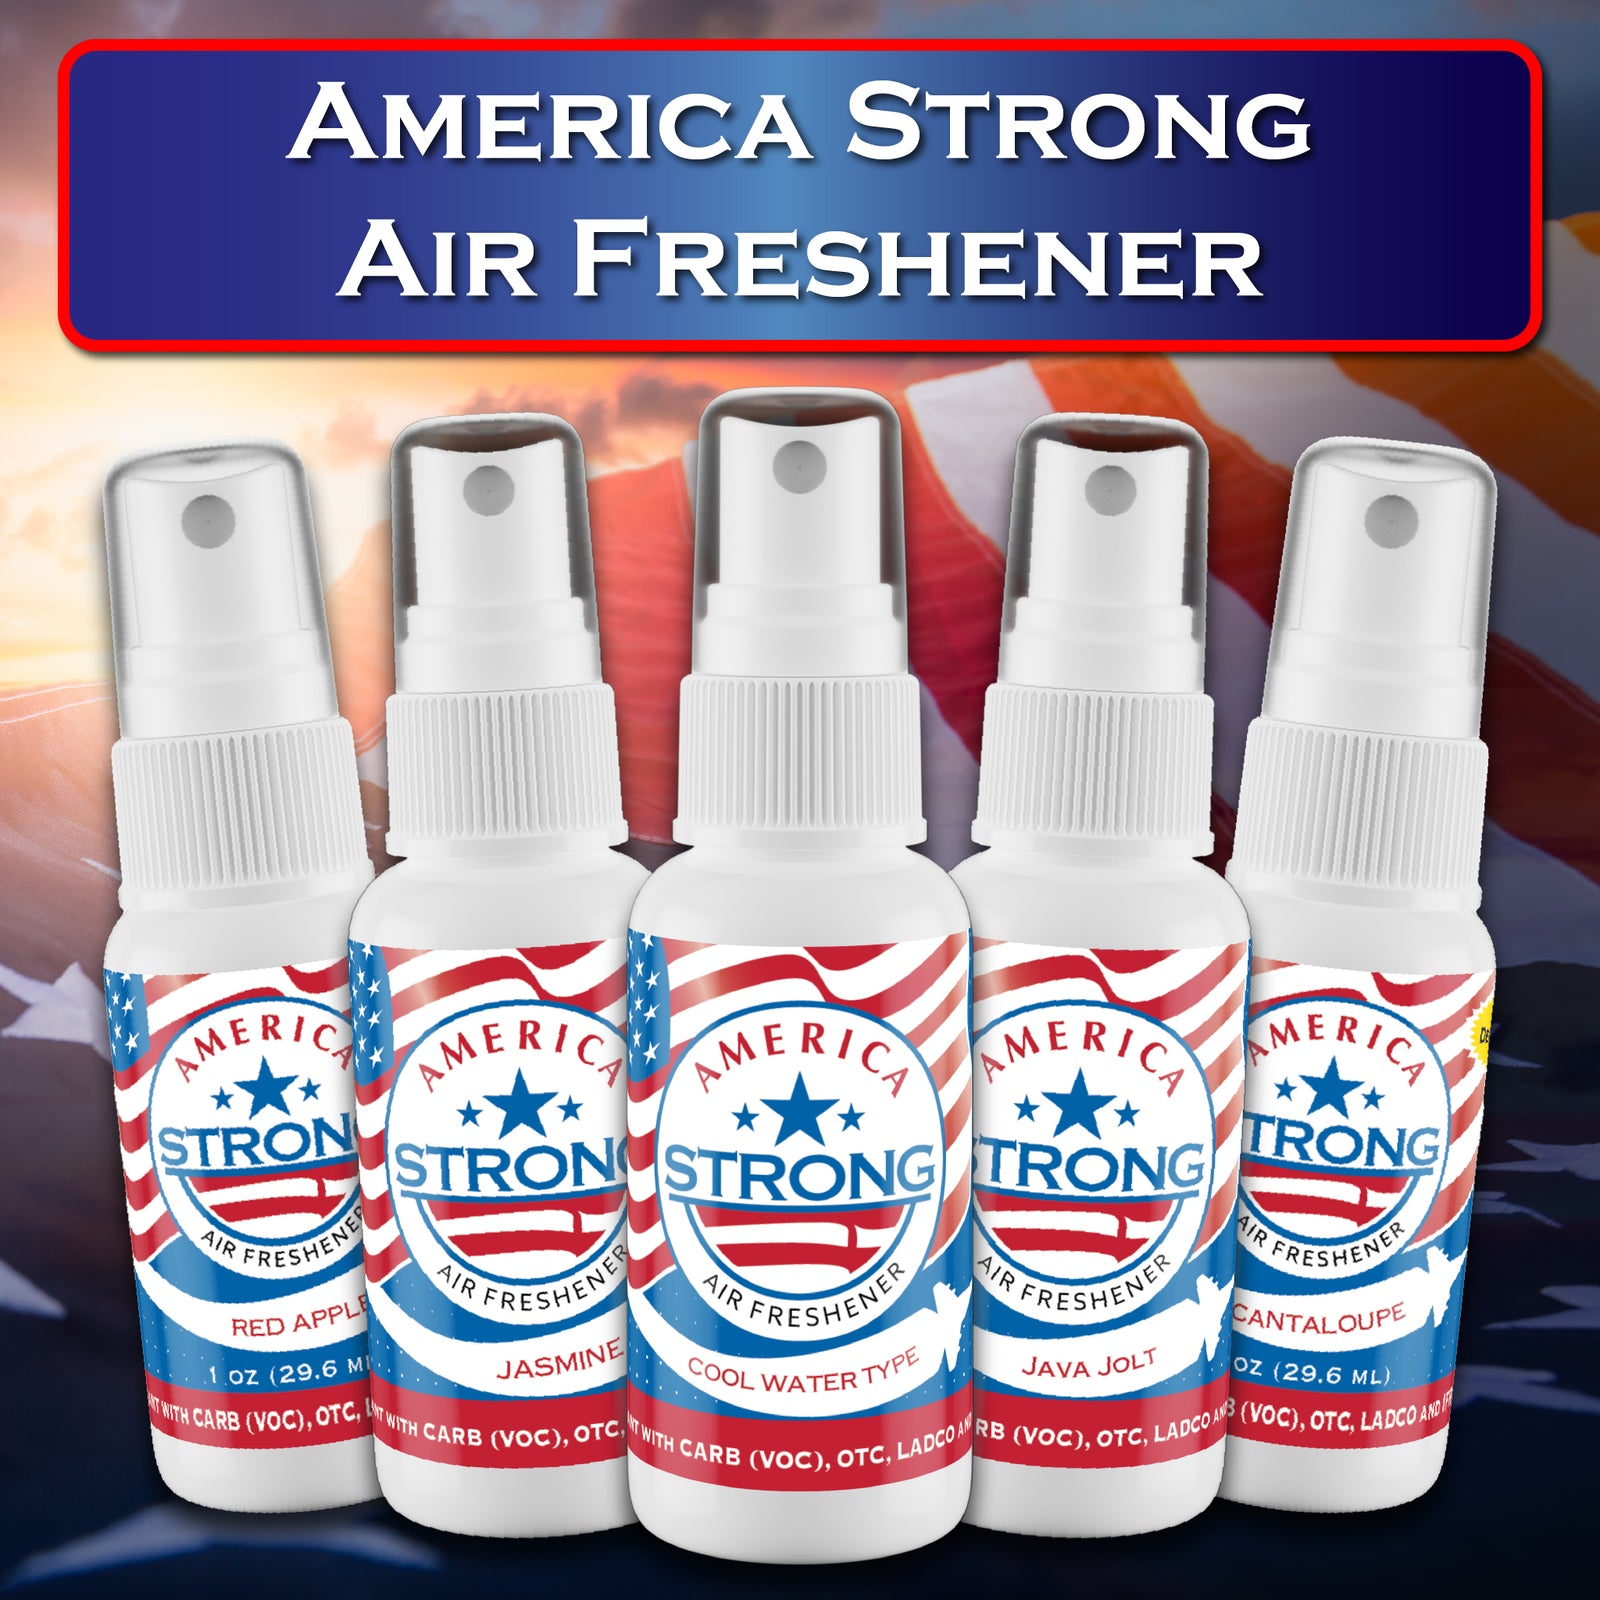 America Strong Air Fresheners